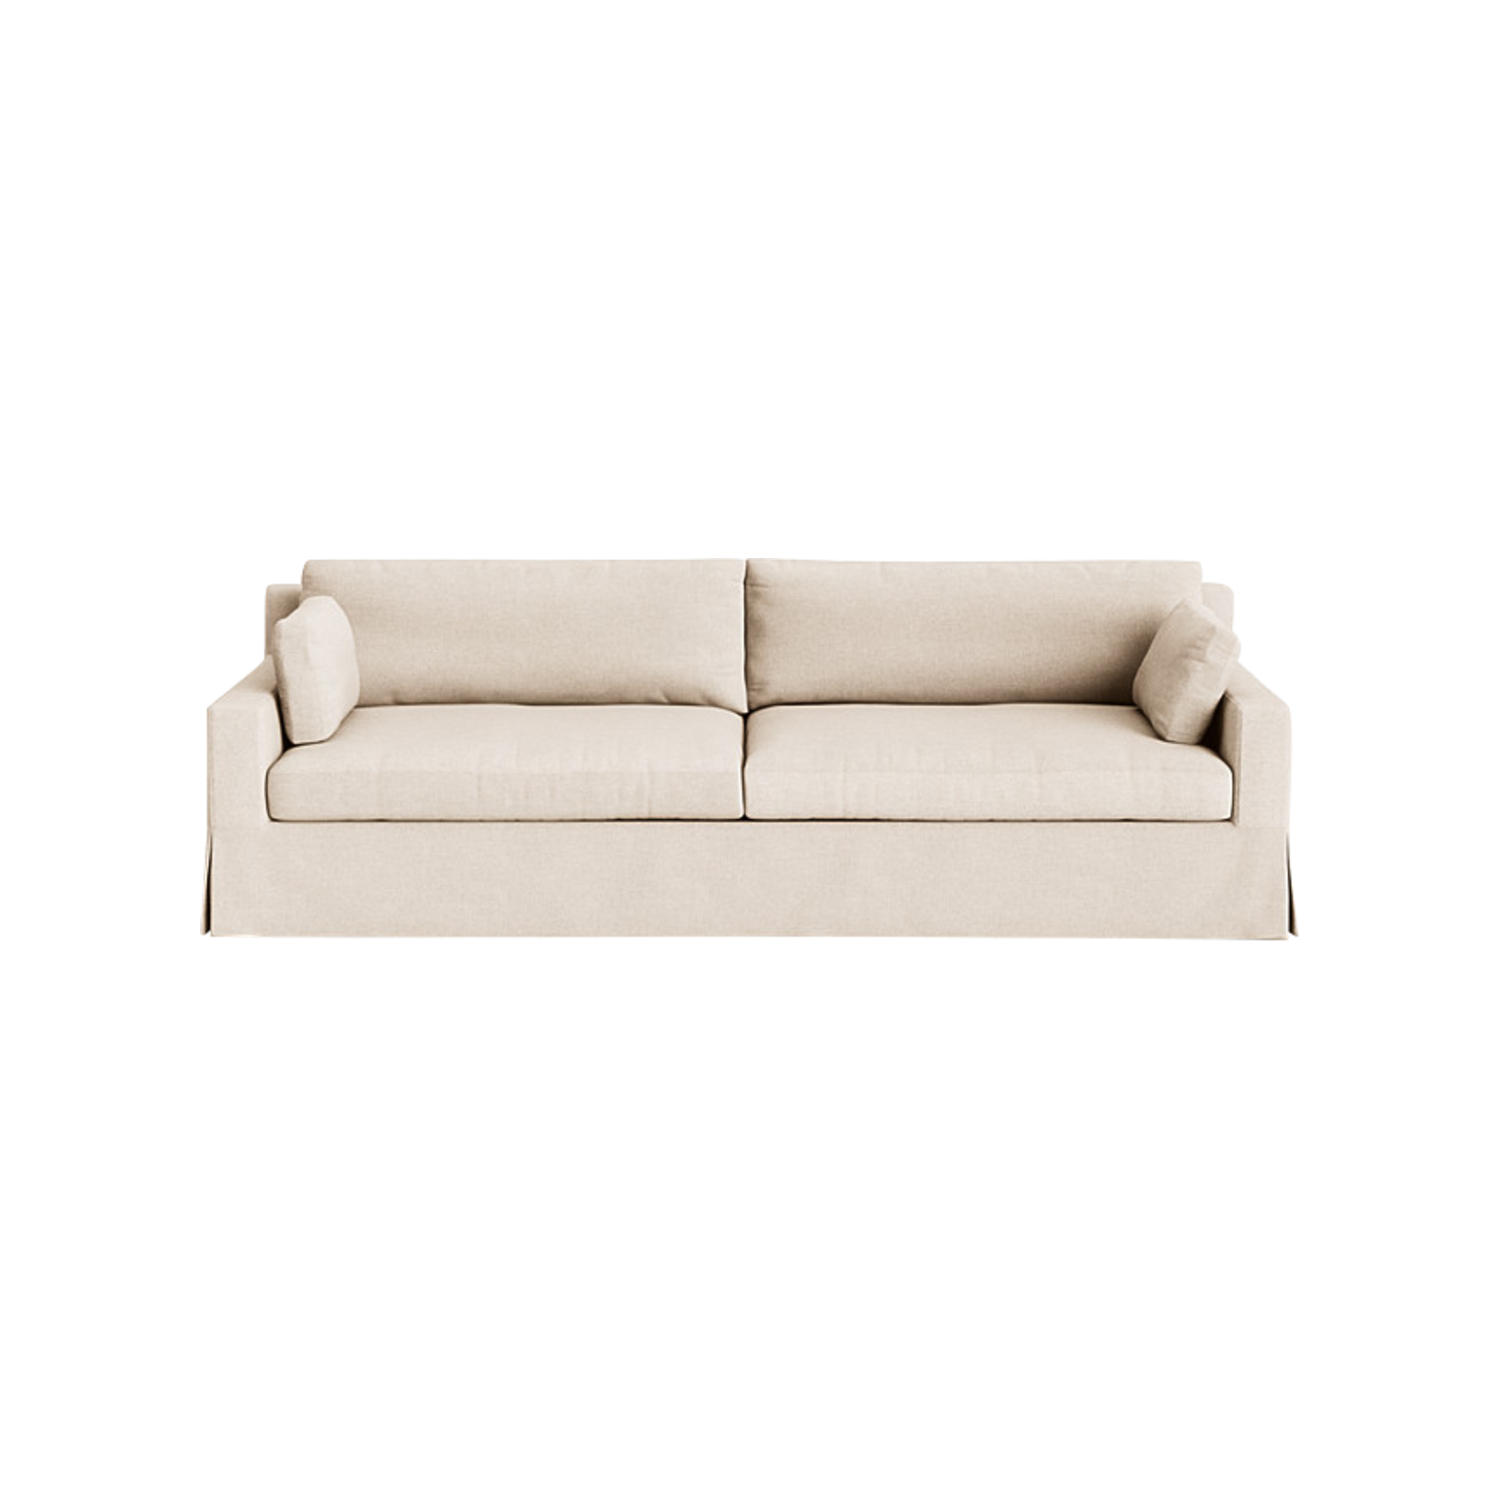 Huxley Track Arm Sofa - 4 Seat/Linen Natural